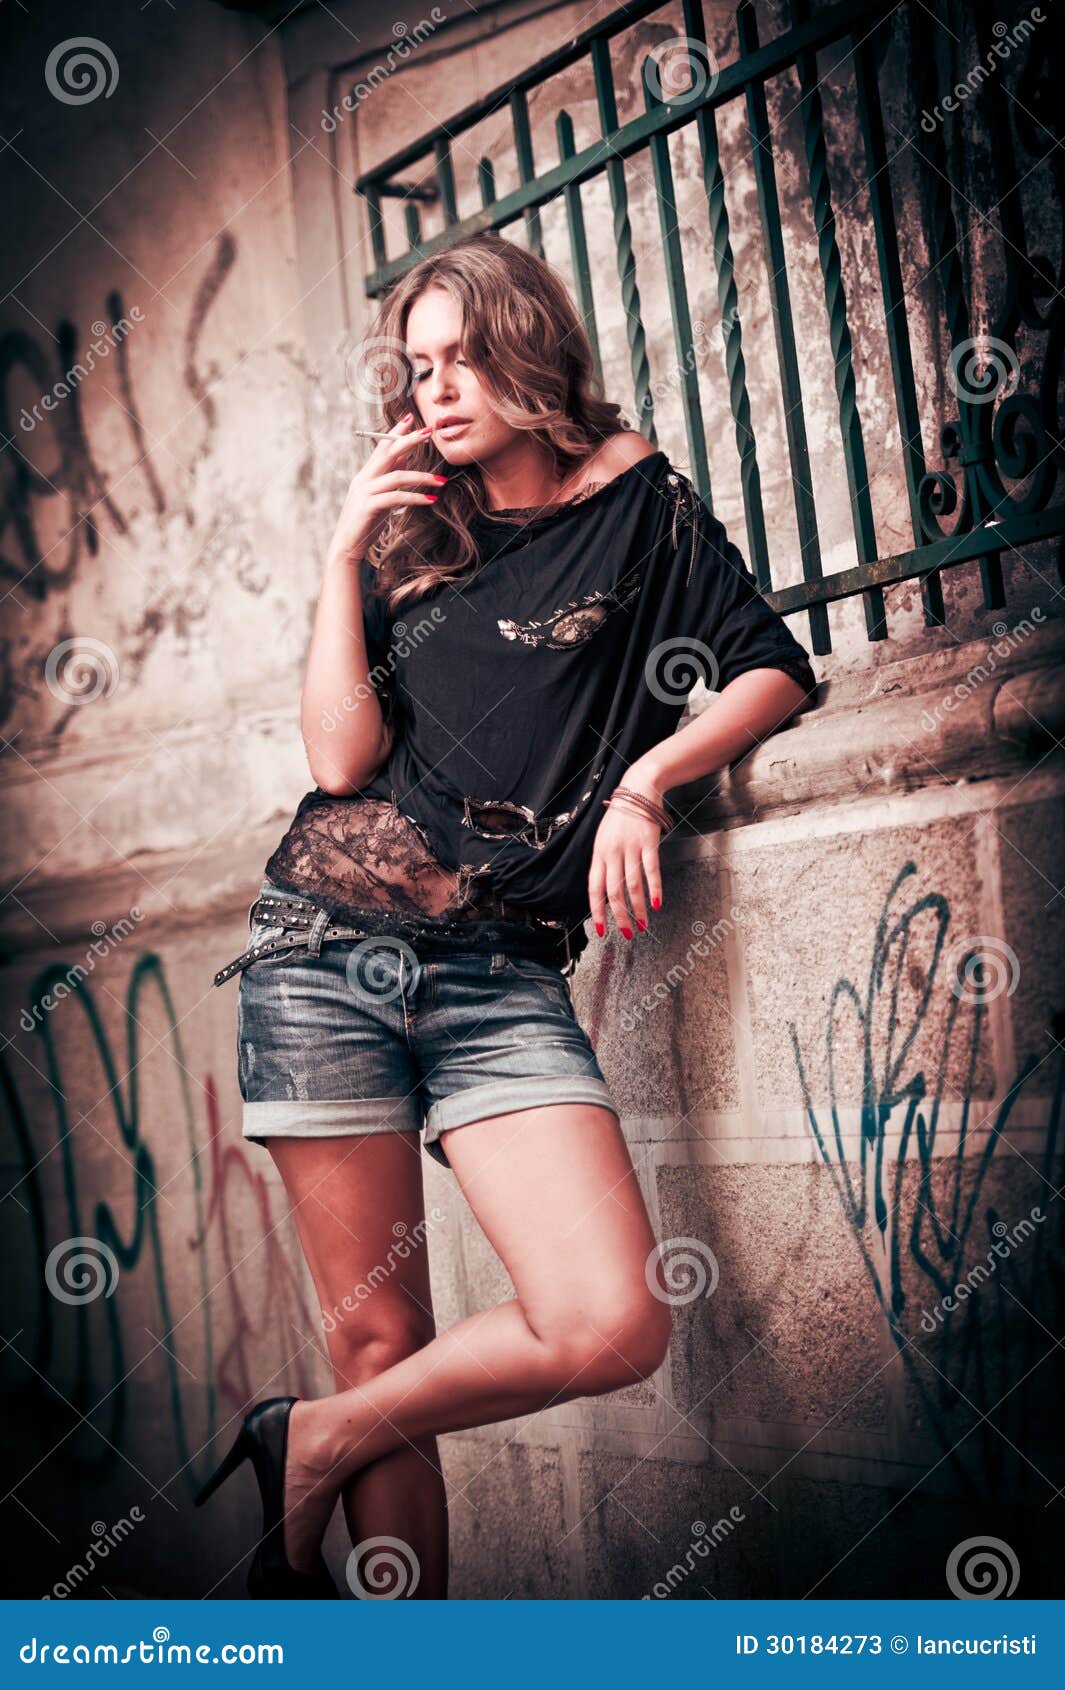 Fashion Urban Portrait Of Beautiful Model On The Street Stock Image